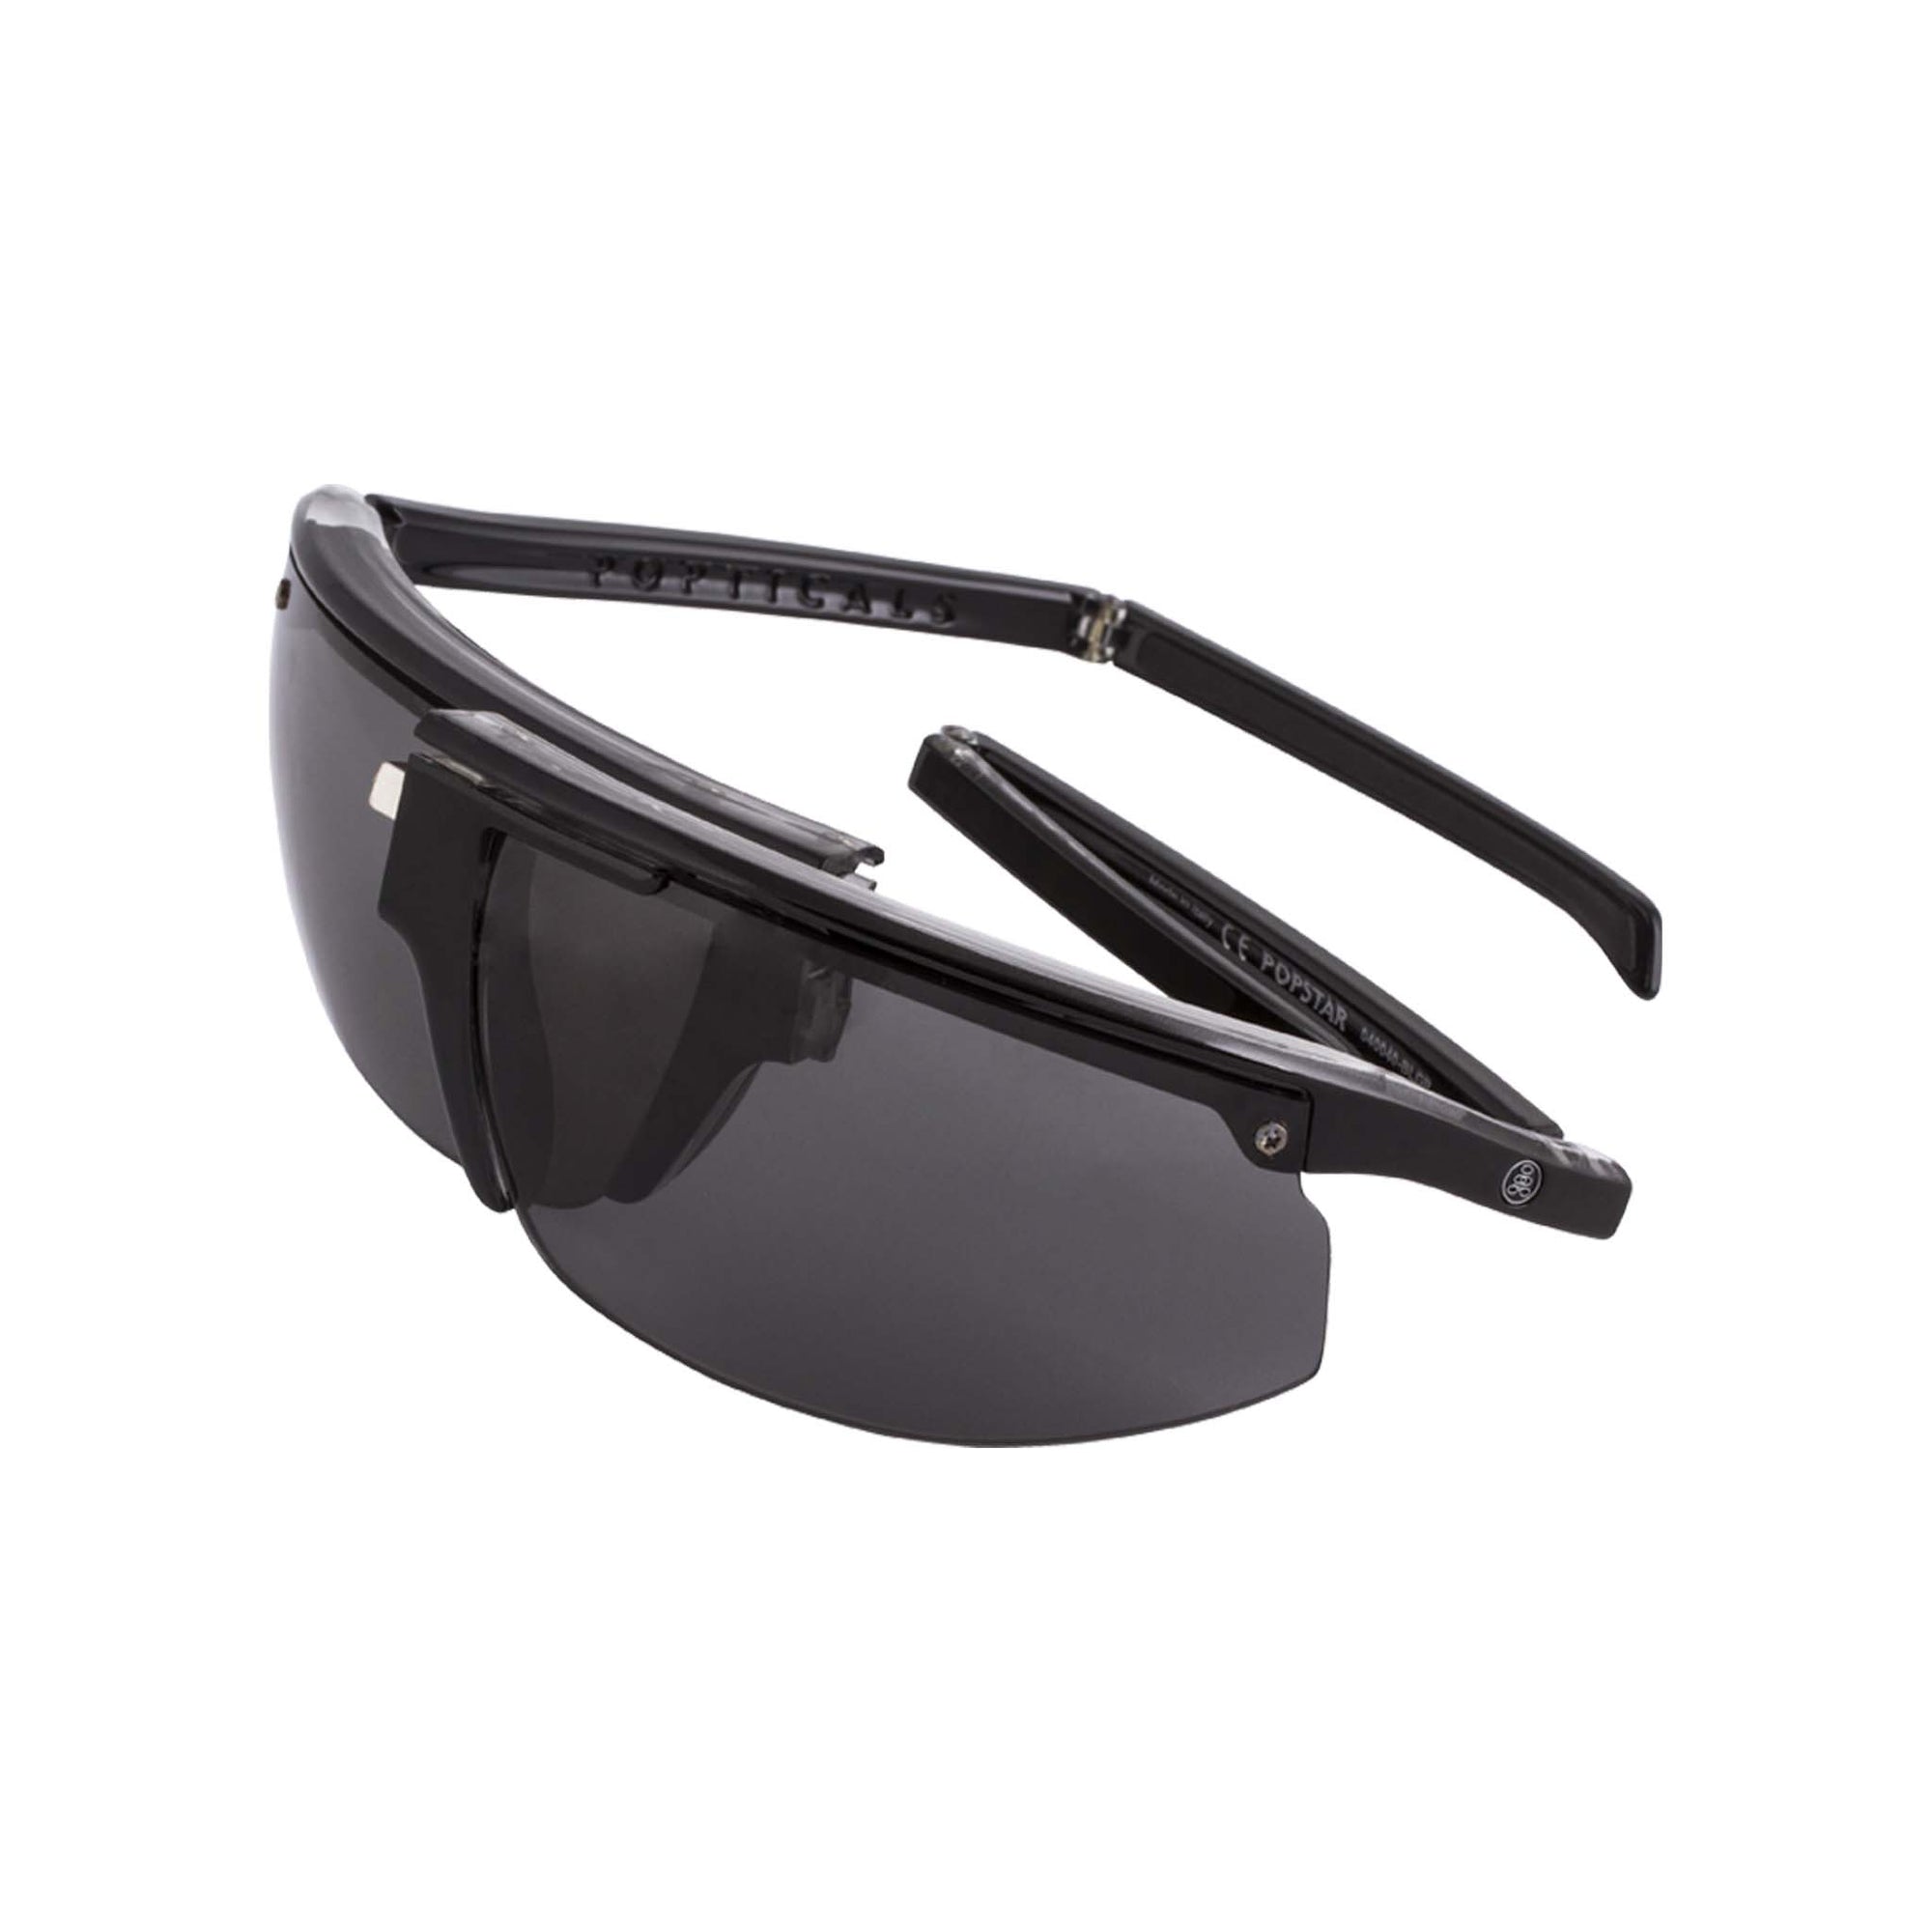 Popticals, Premium Compact Sunglasses, PopStar, 040040-BLGP, Polarized Sunglasses, Gloss Black Crystal Frame, Gray Lenses, Glam View